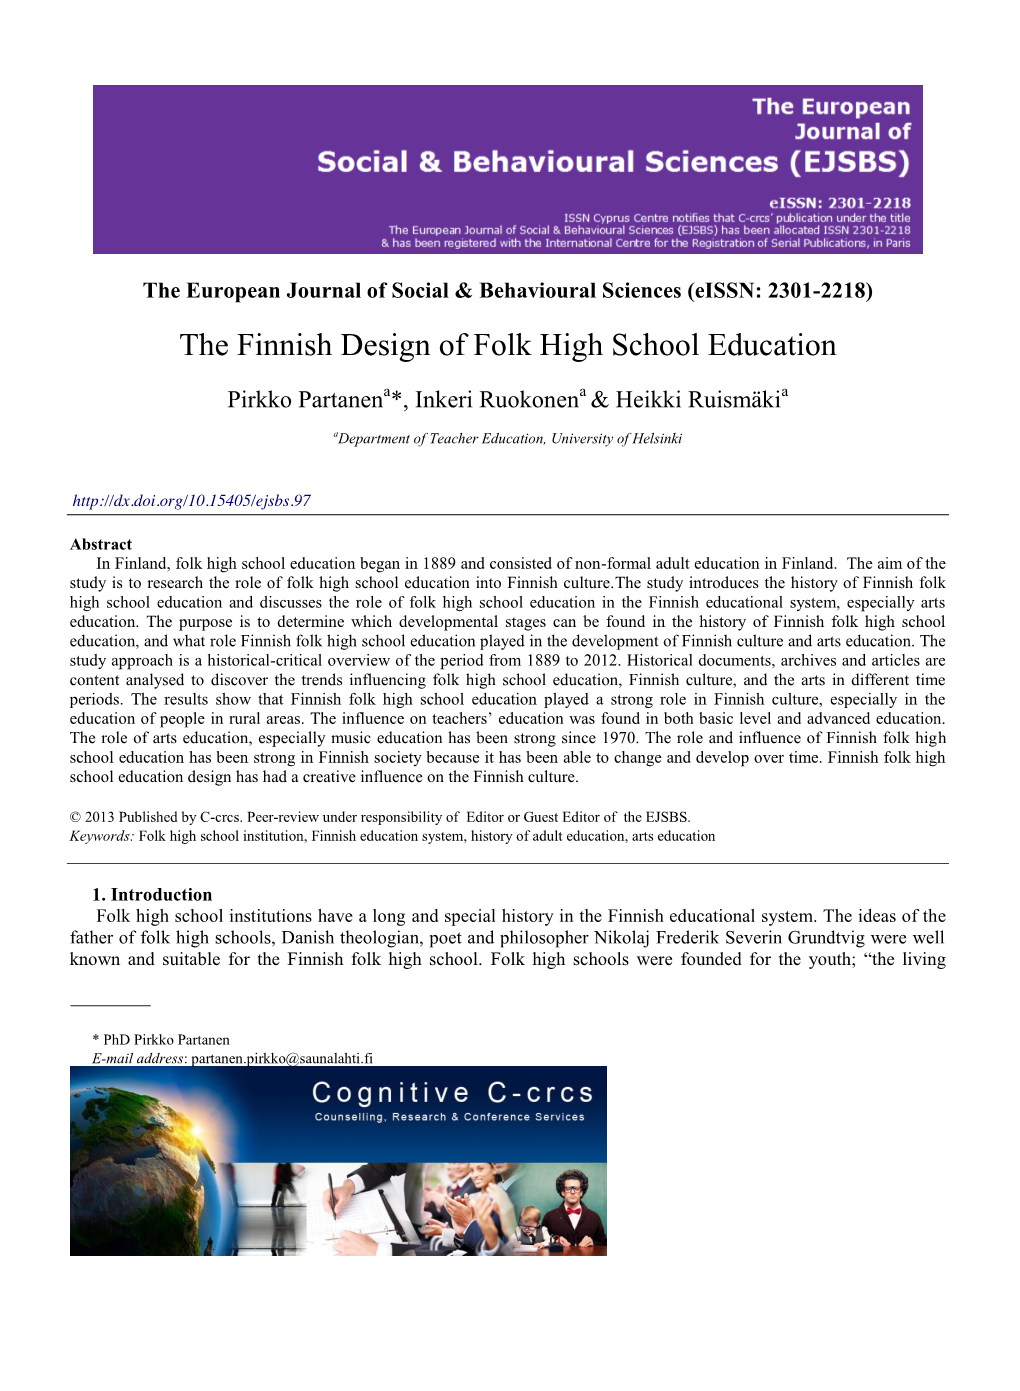 The Finnish Design of Folk High School Education